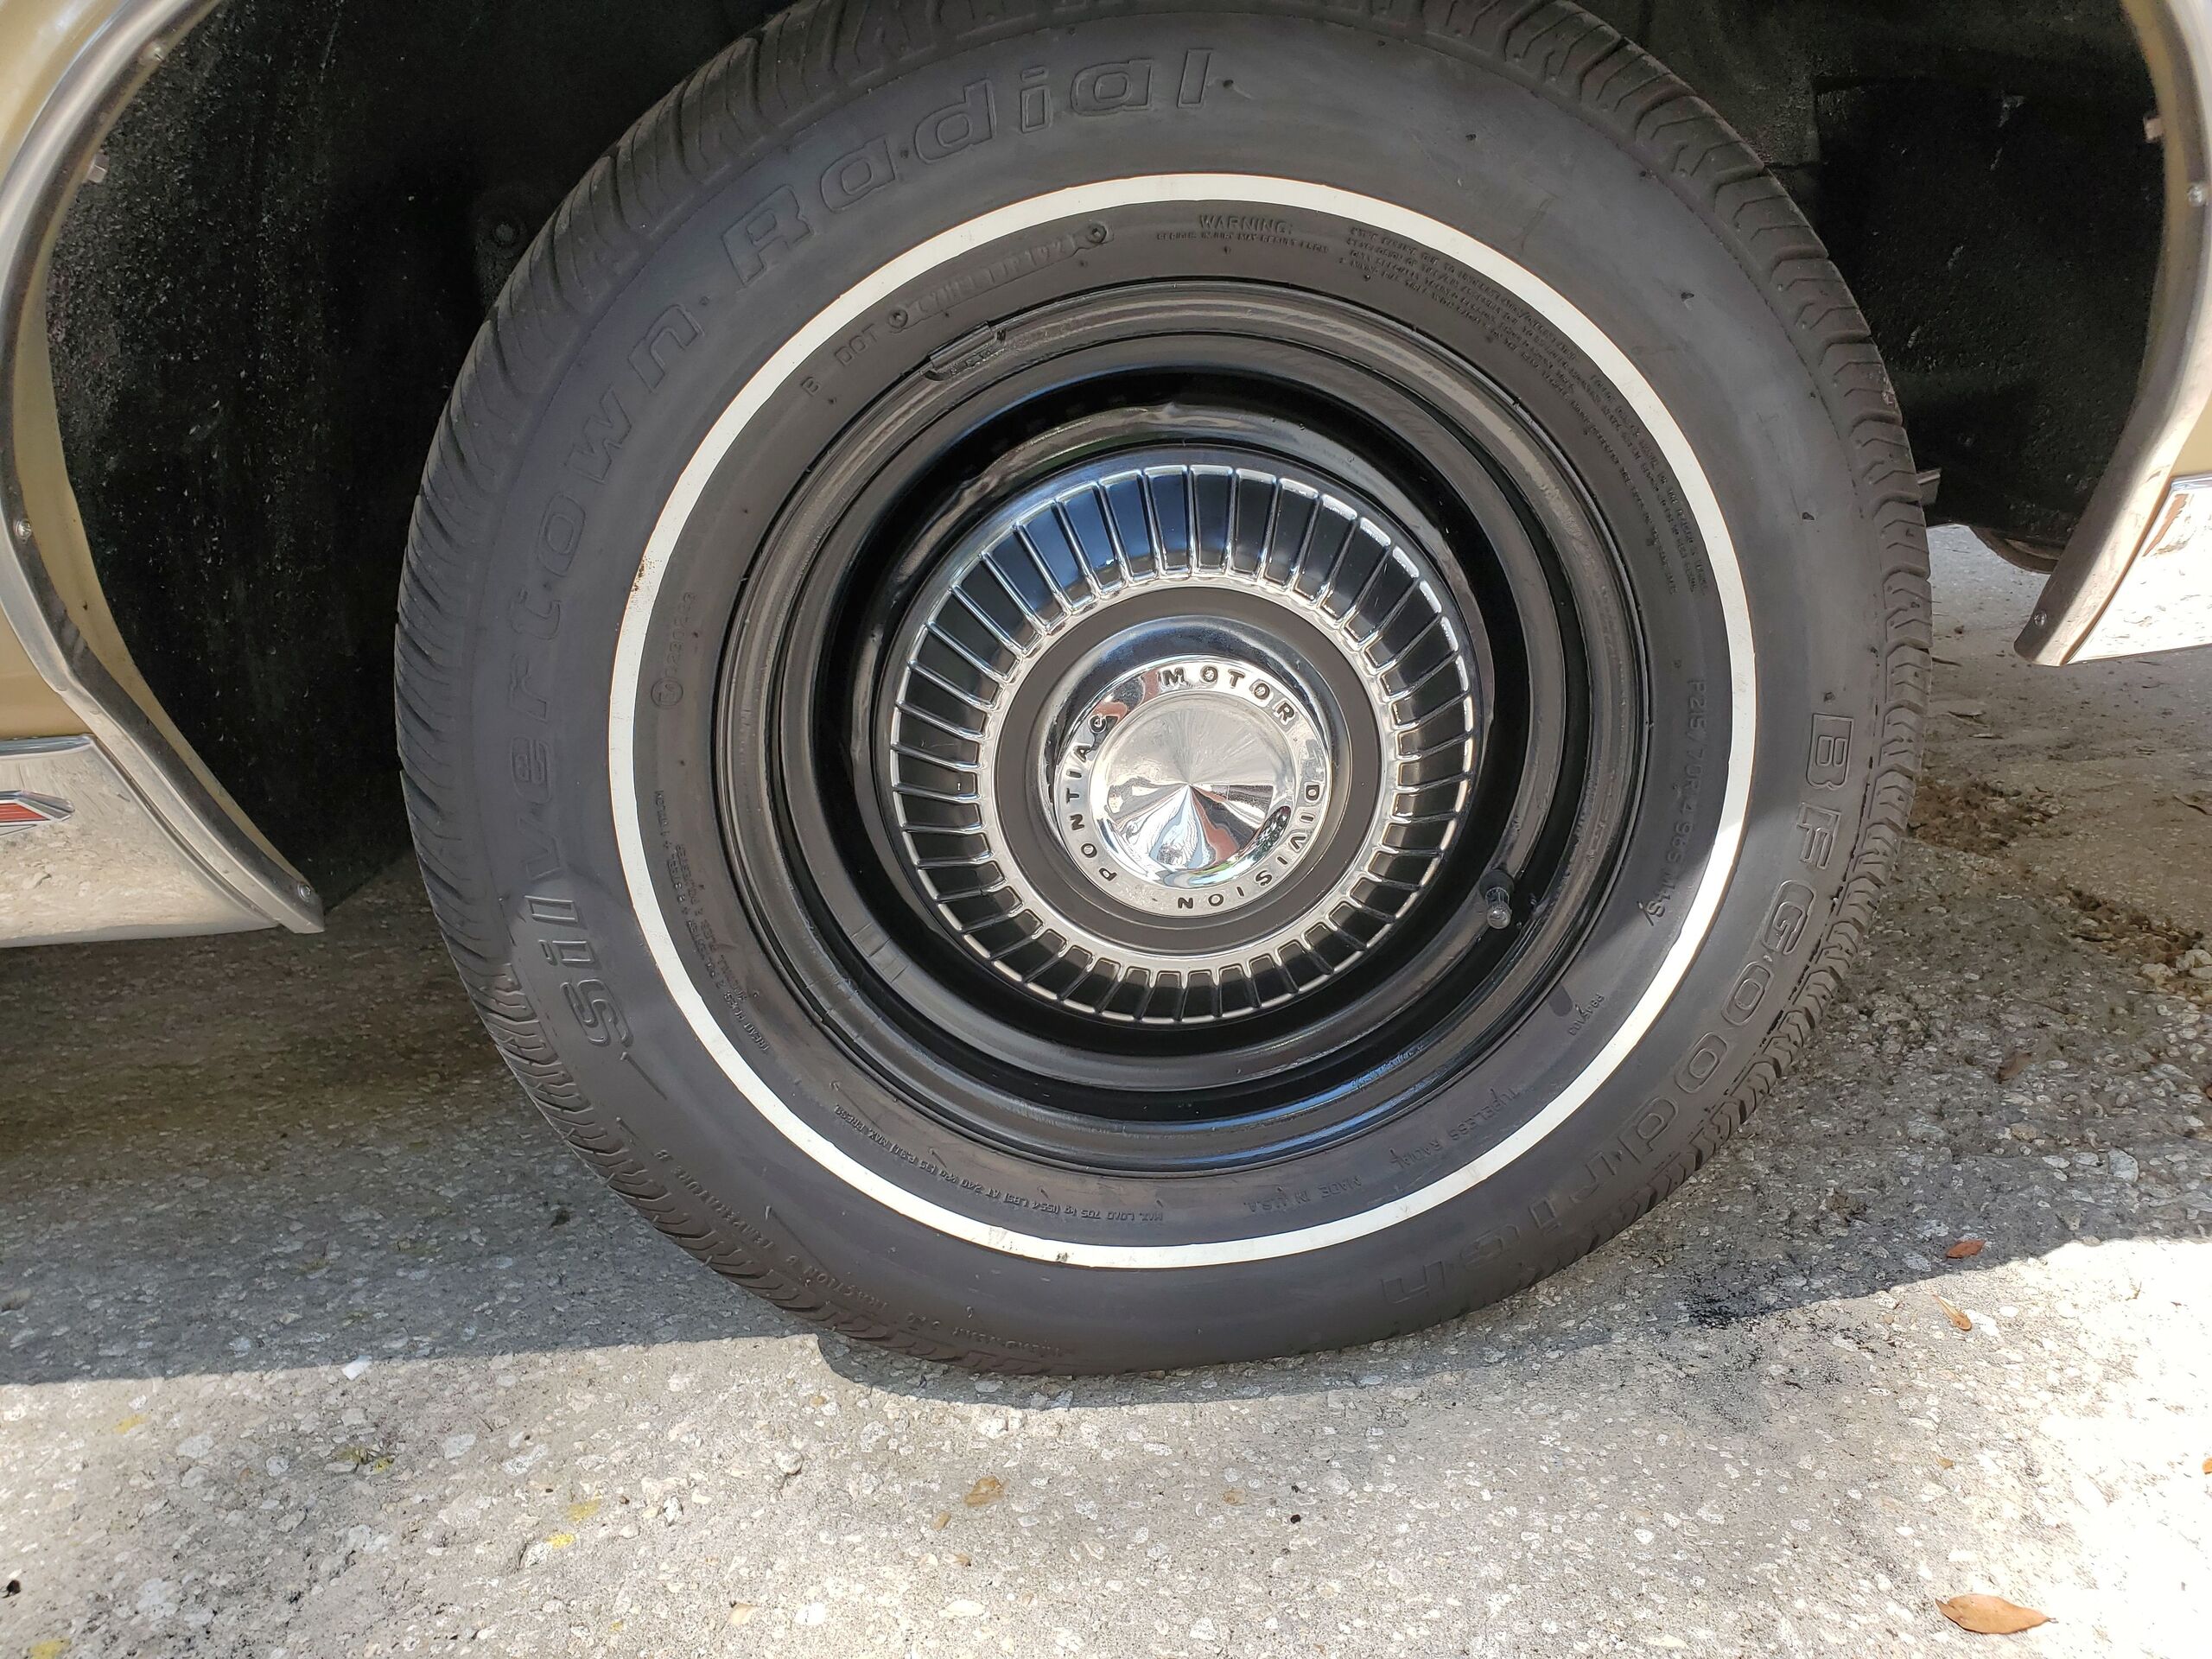 1967 Pontiac GTO 29